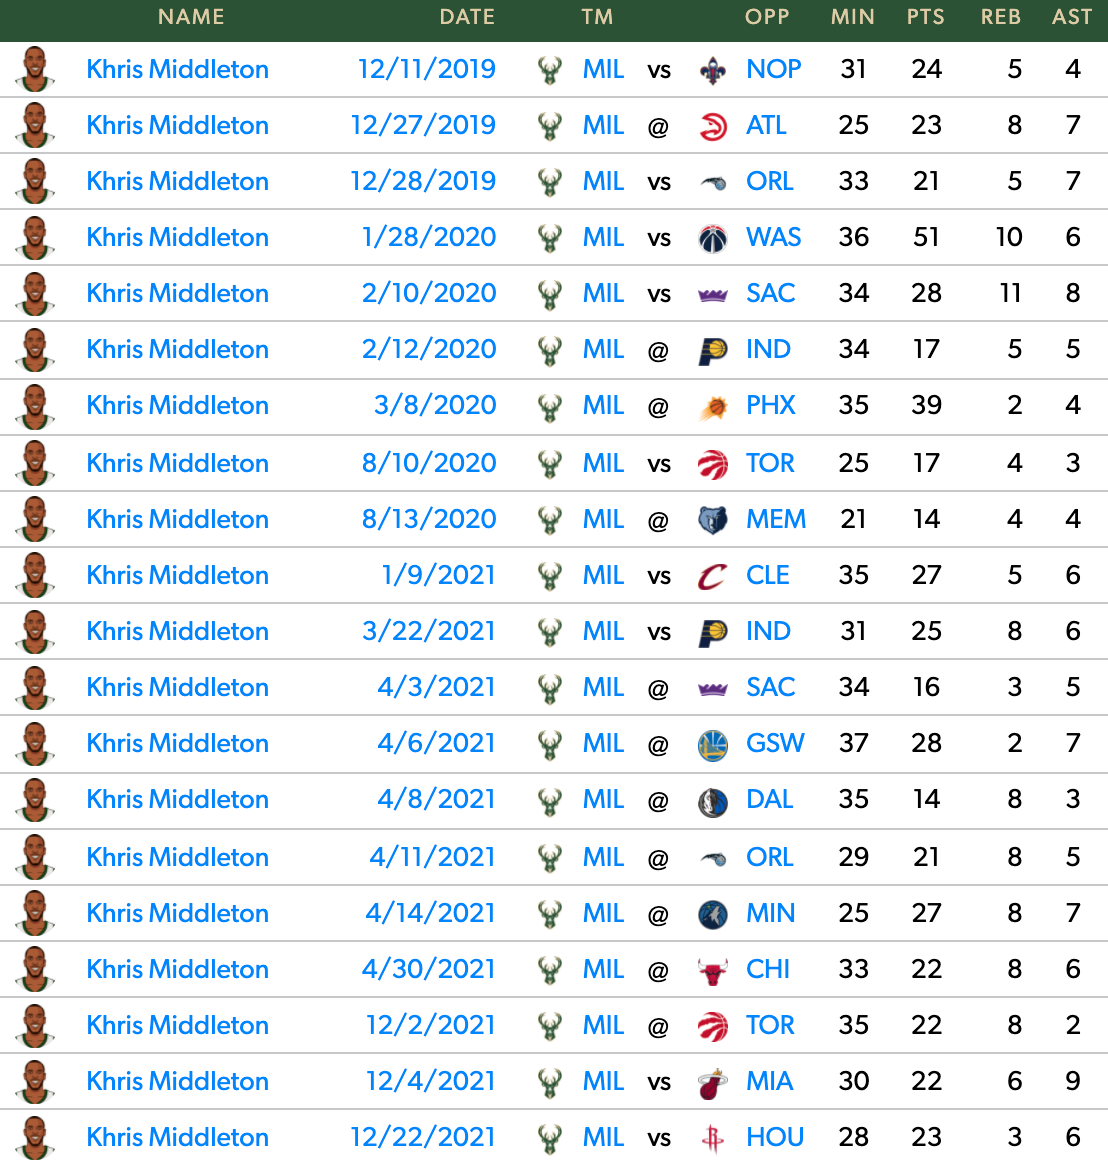 Catatan pertandingan Middleton tanpa Giannis sejak 2019-20.